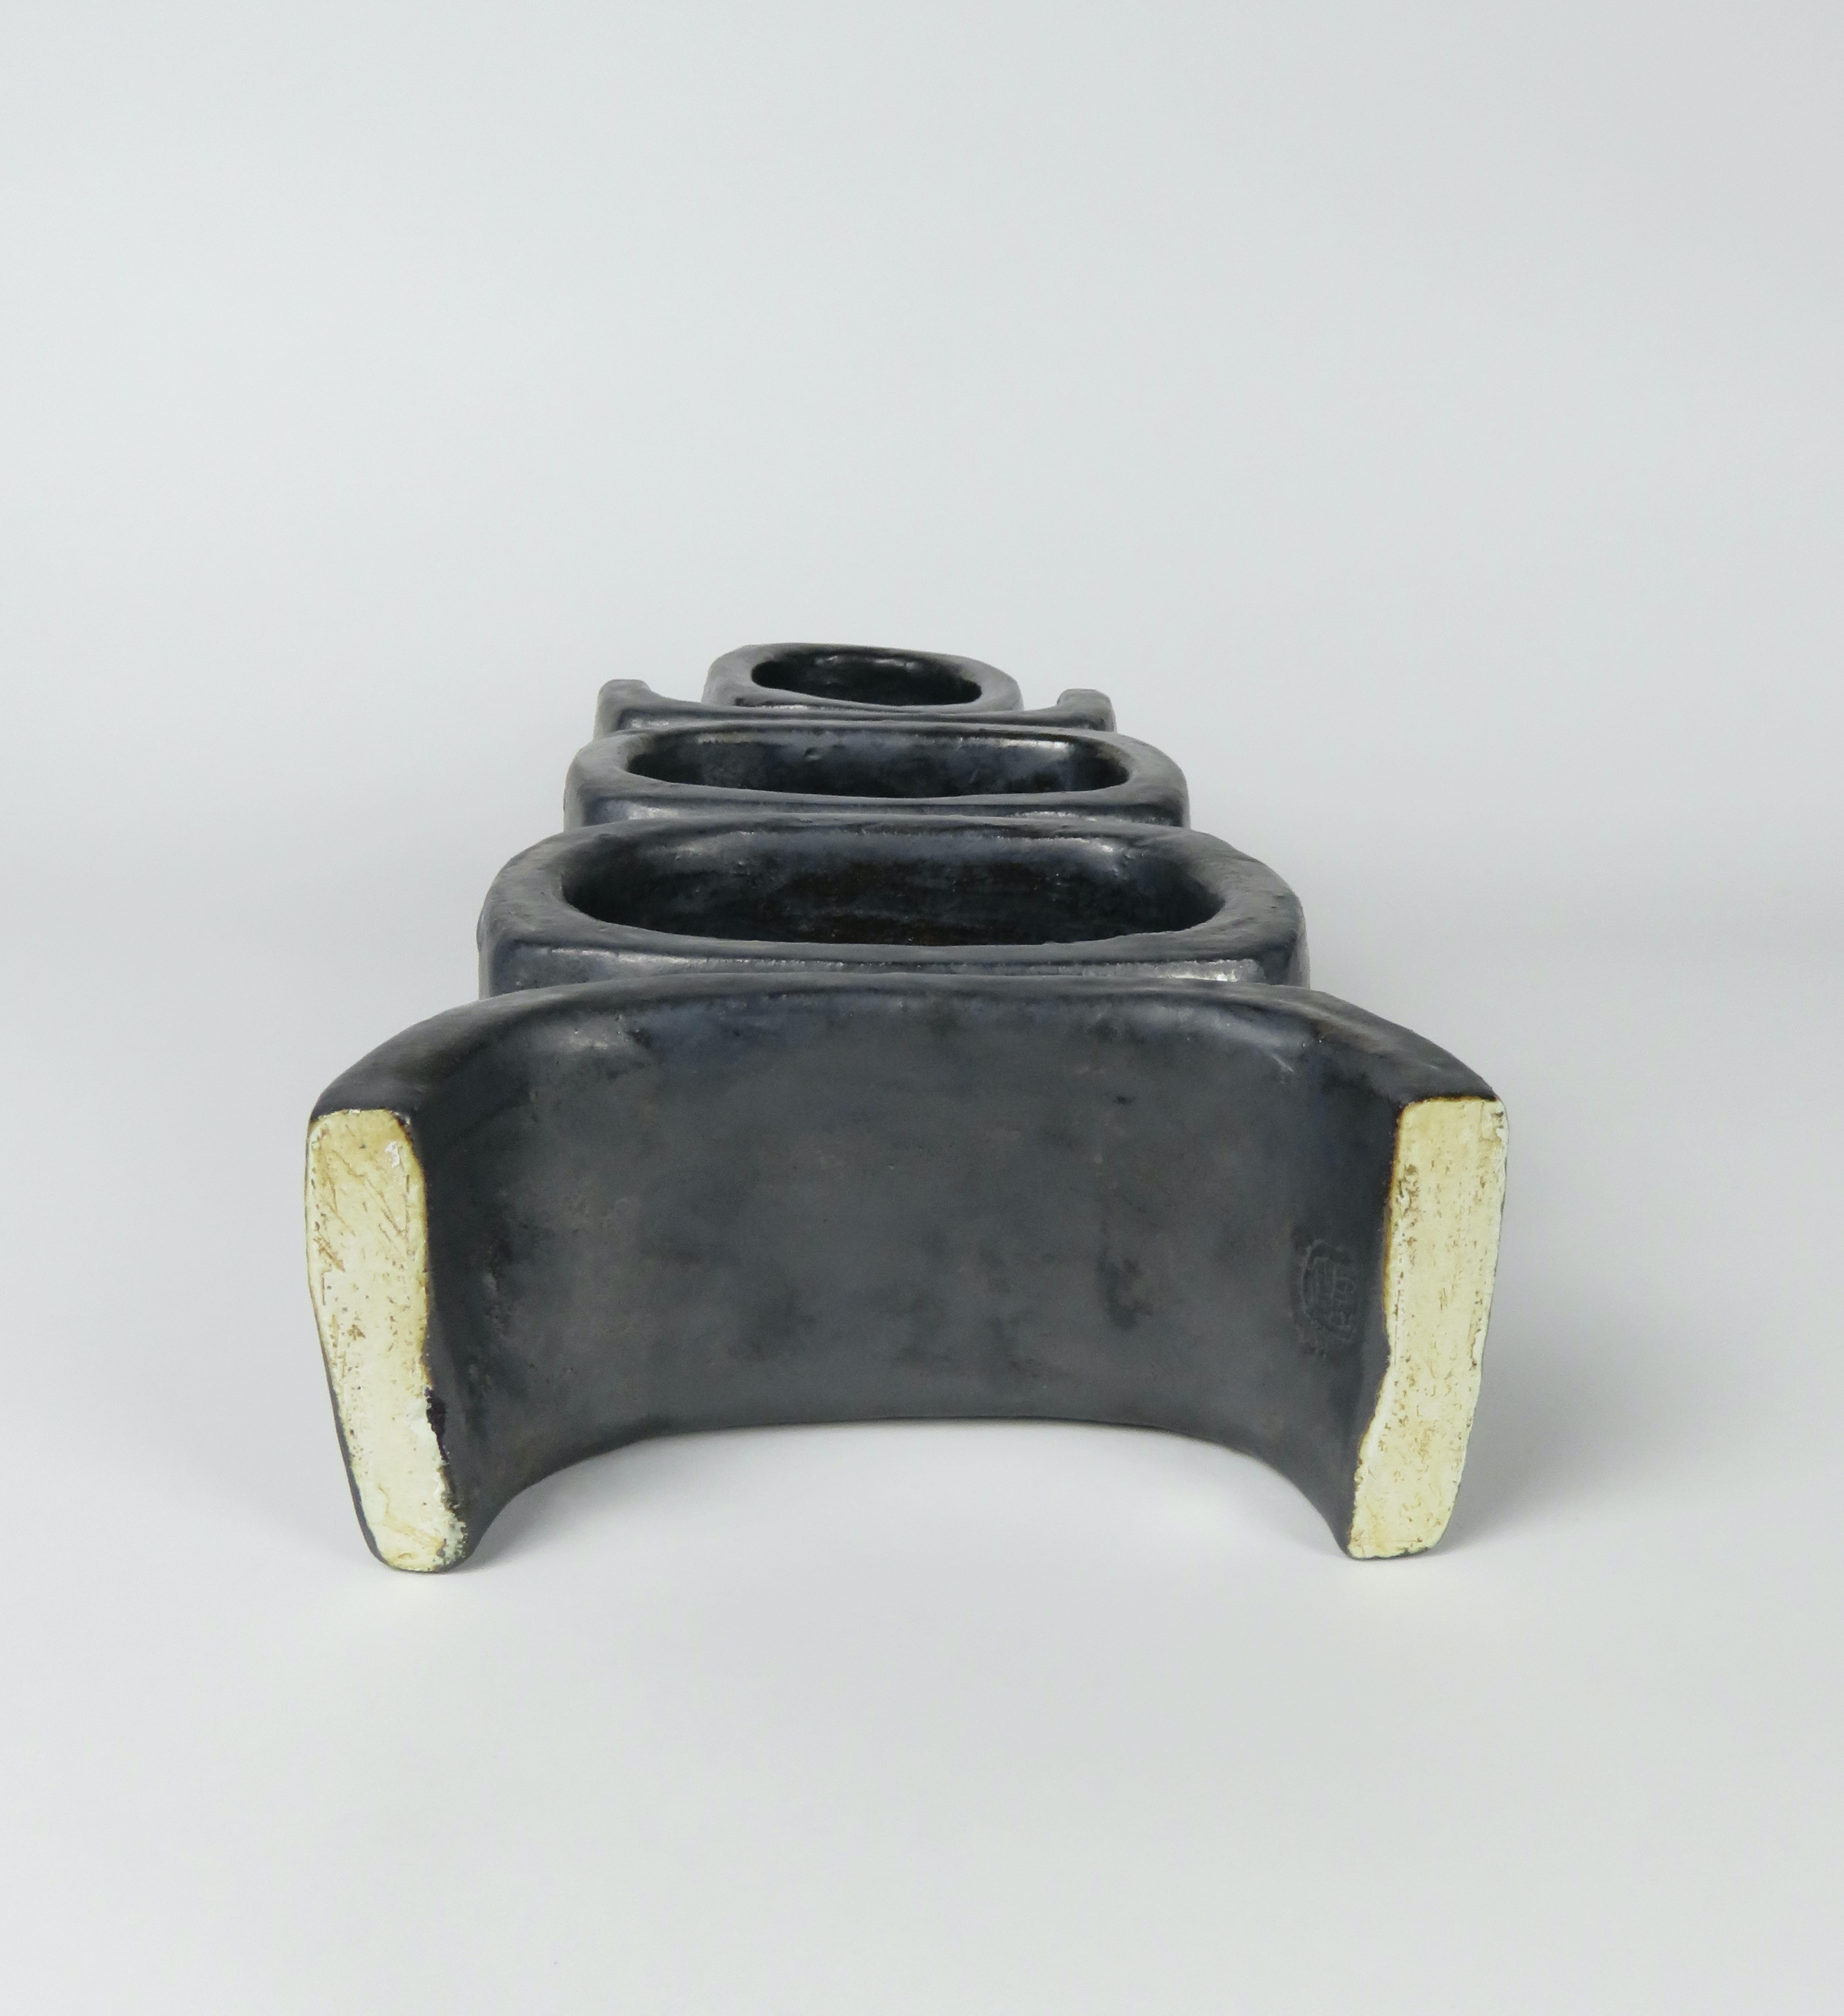 3 Rectangular Ovals, Short Angled Legs, Metallic Black-Glazed Clay Sculpture #1 5